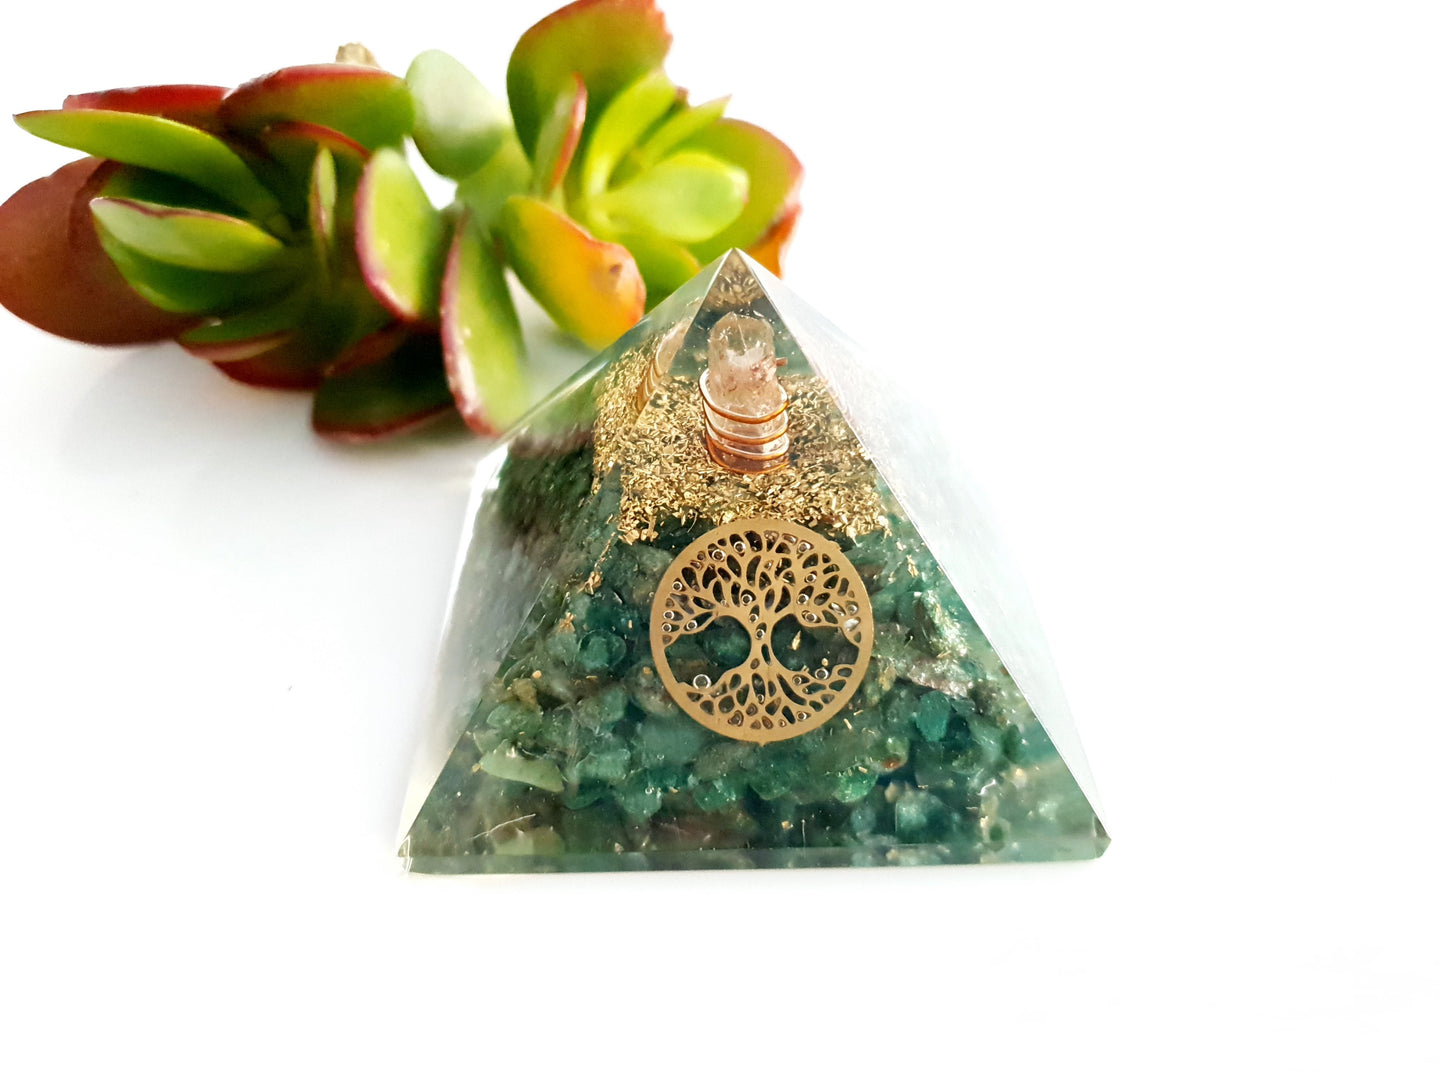 Green aventurine orgonite pyramid crystals